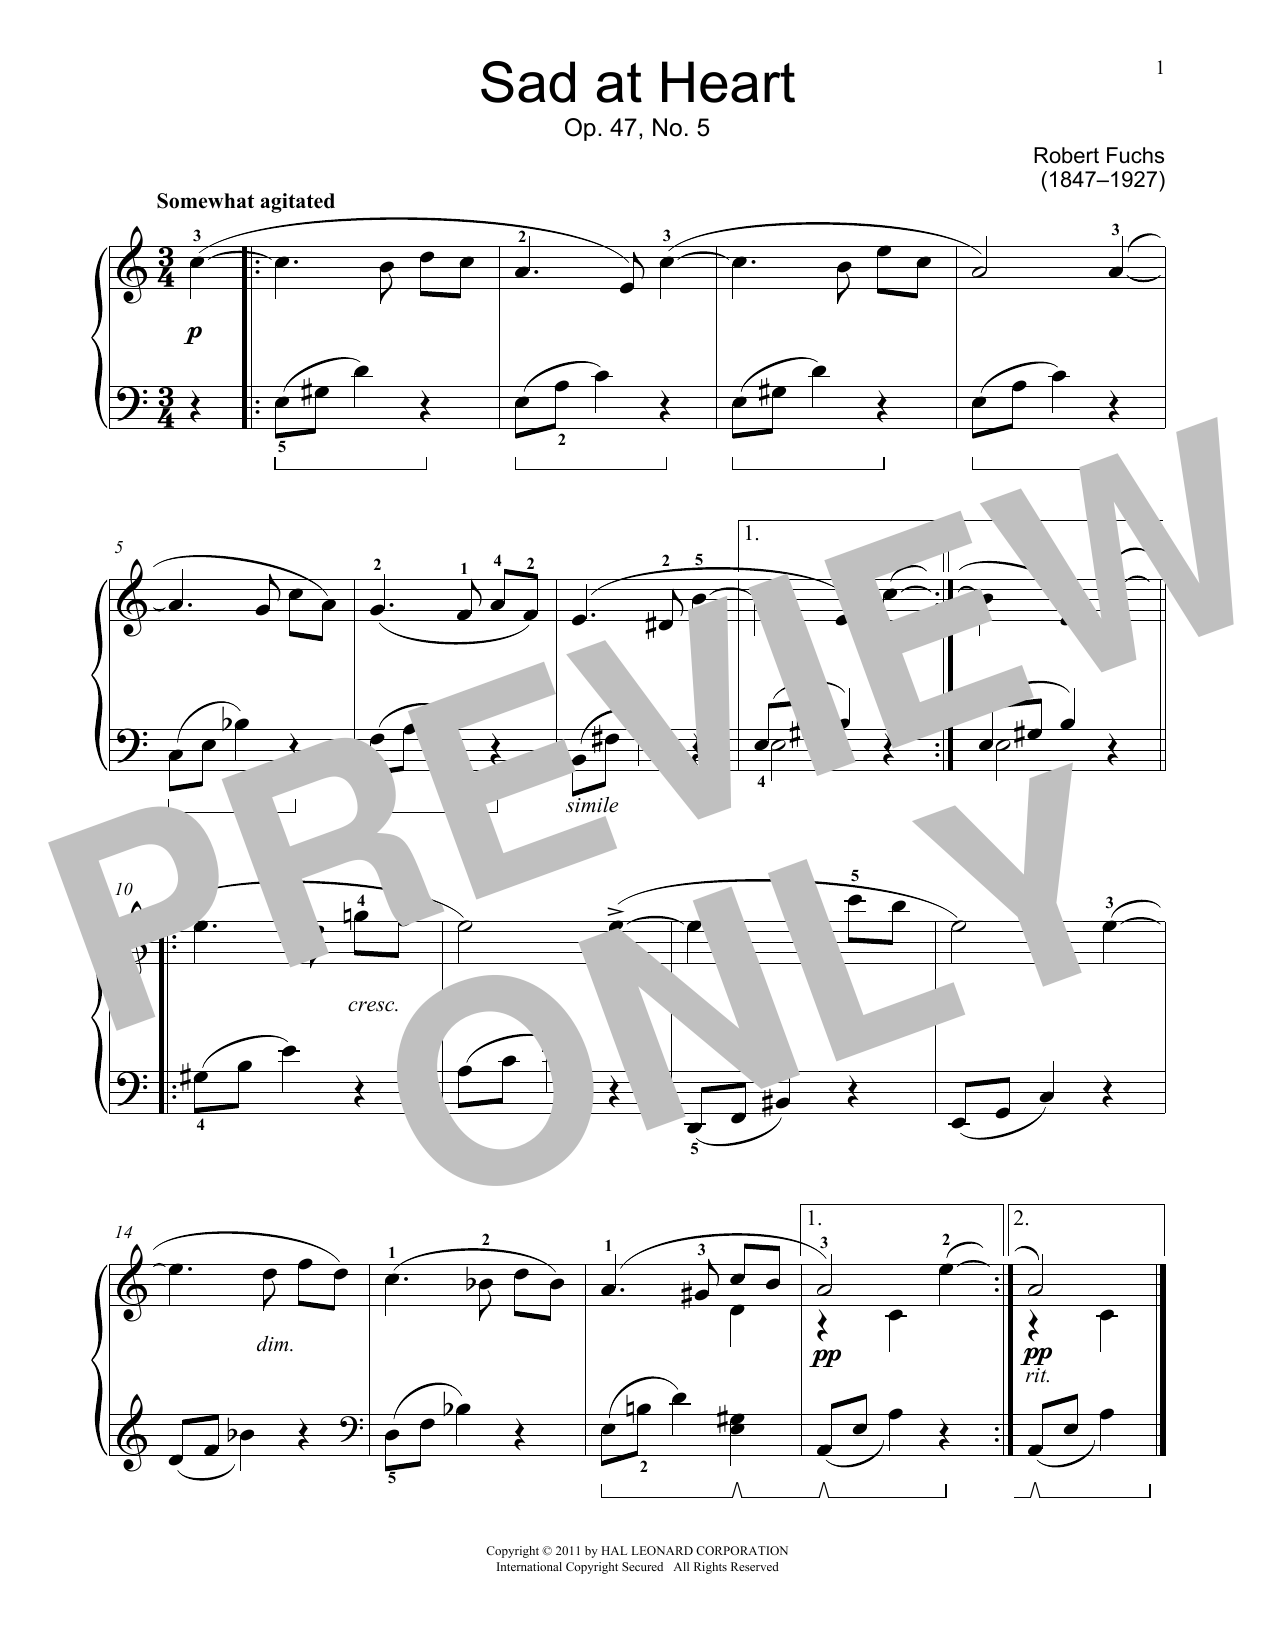 Robert Fuchs Sad At Heart, Op. 47, No. 5 Sheet Music Notes & Chords for Educational Piano - Download or Print PDF